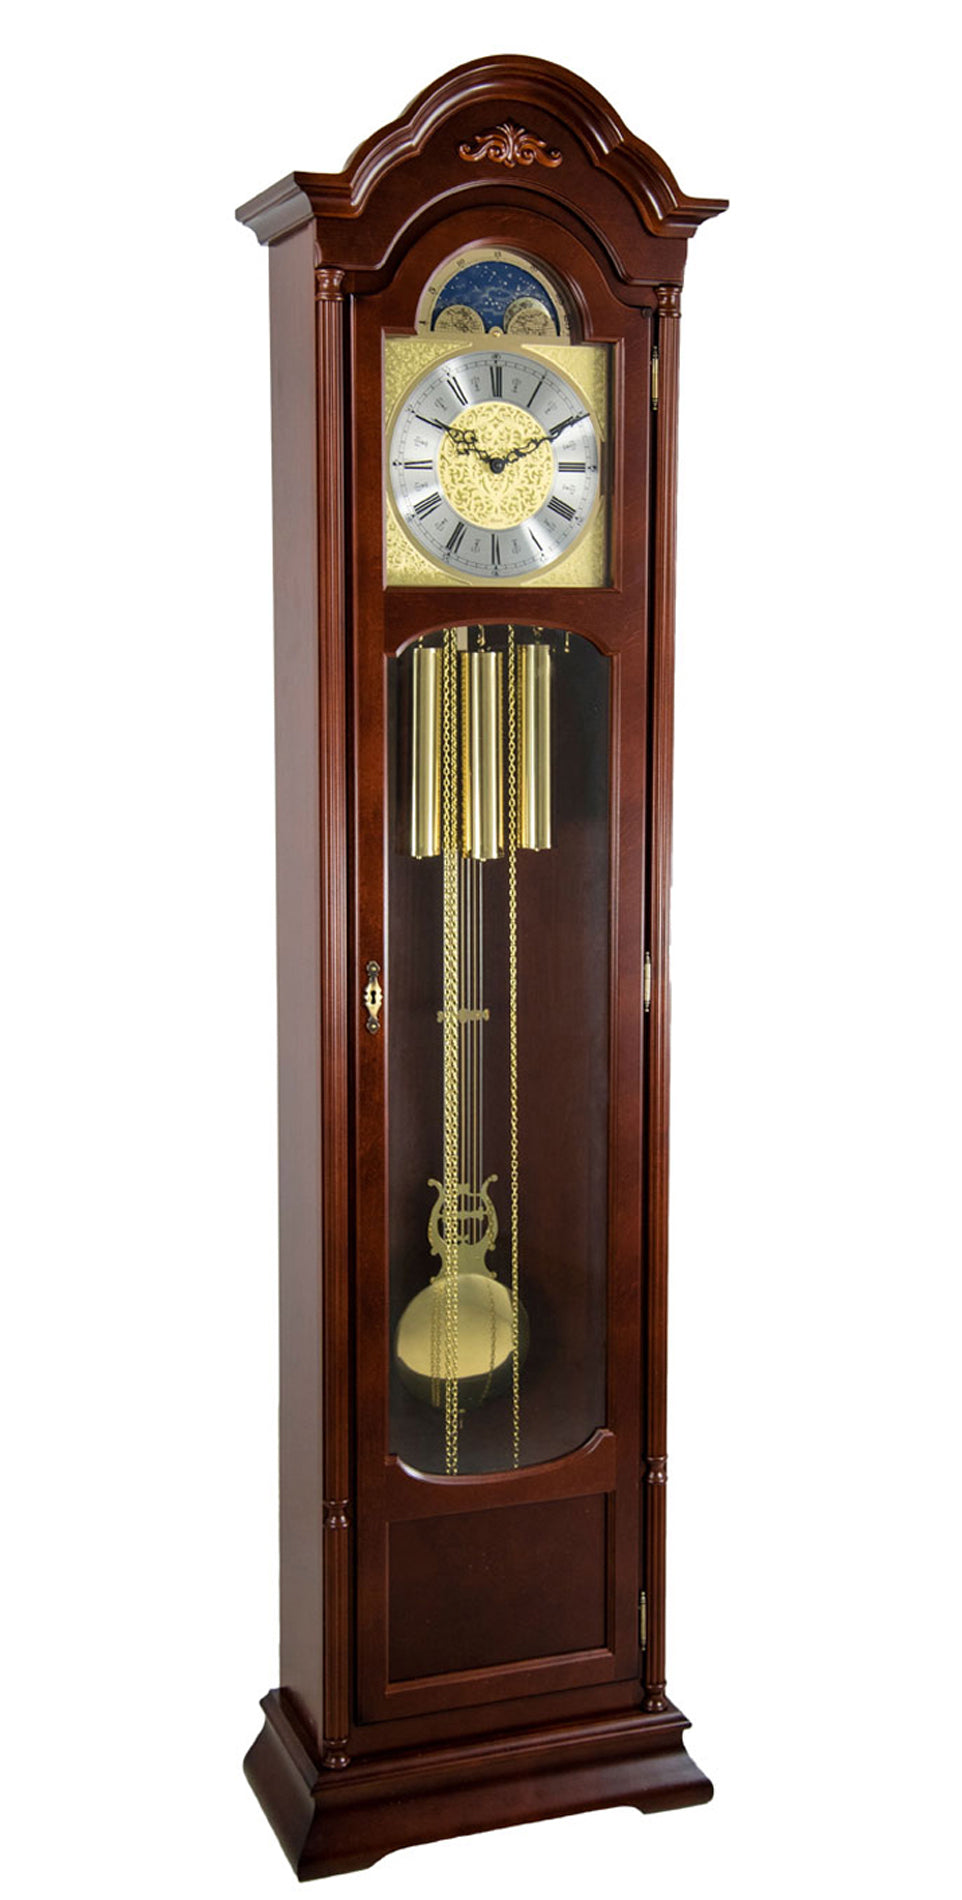 Atherton Grandfather Clock by Hermle Clocks